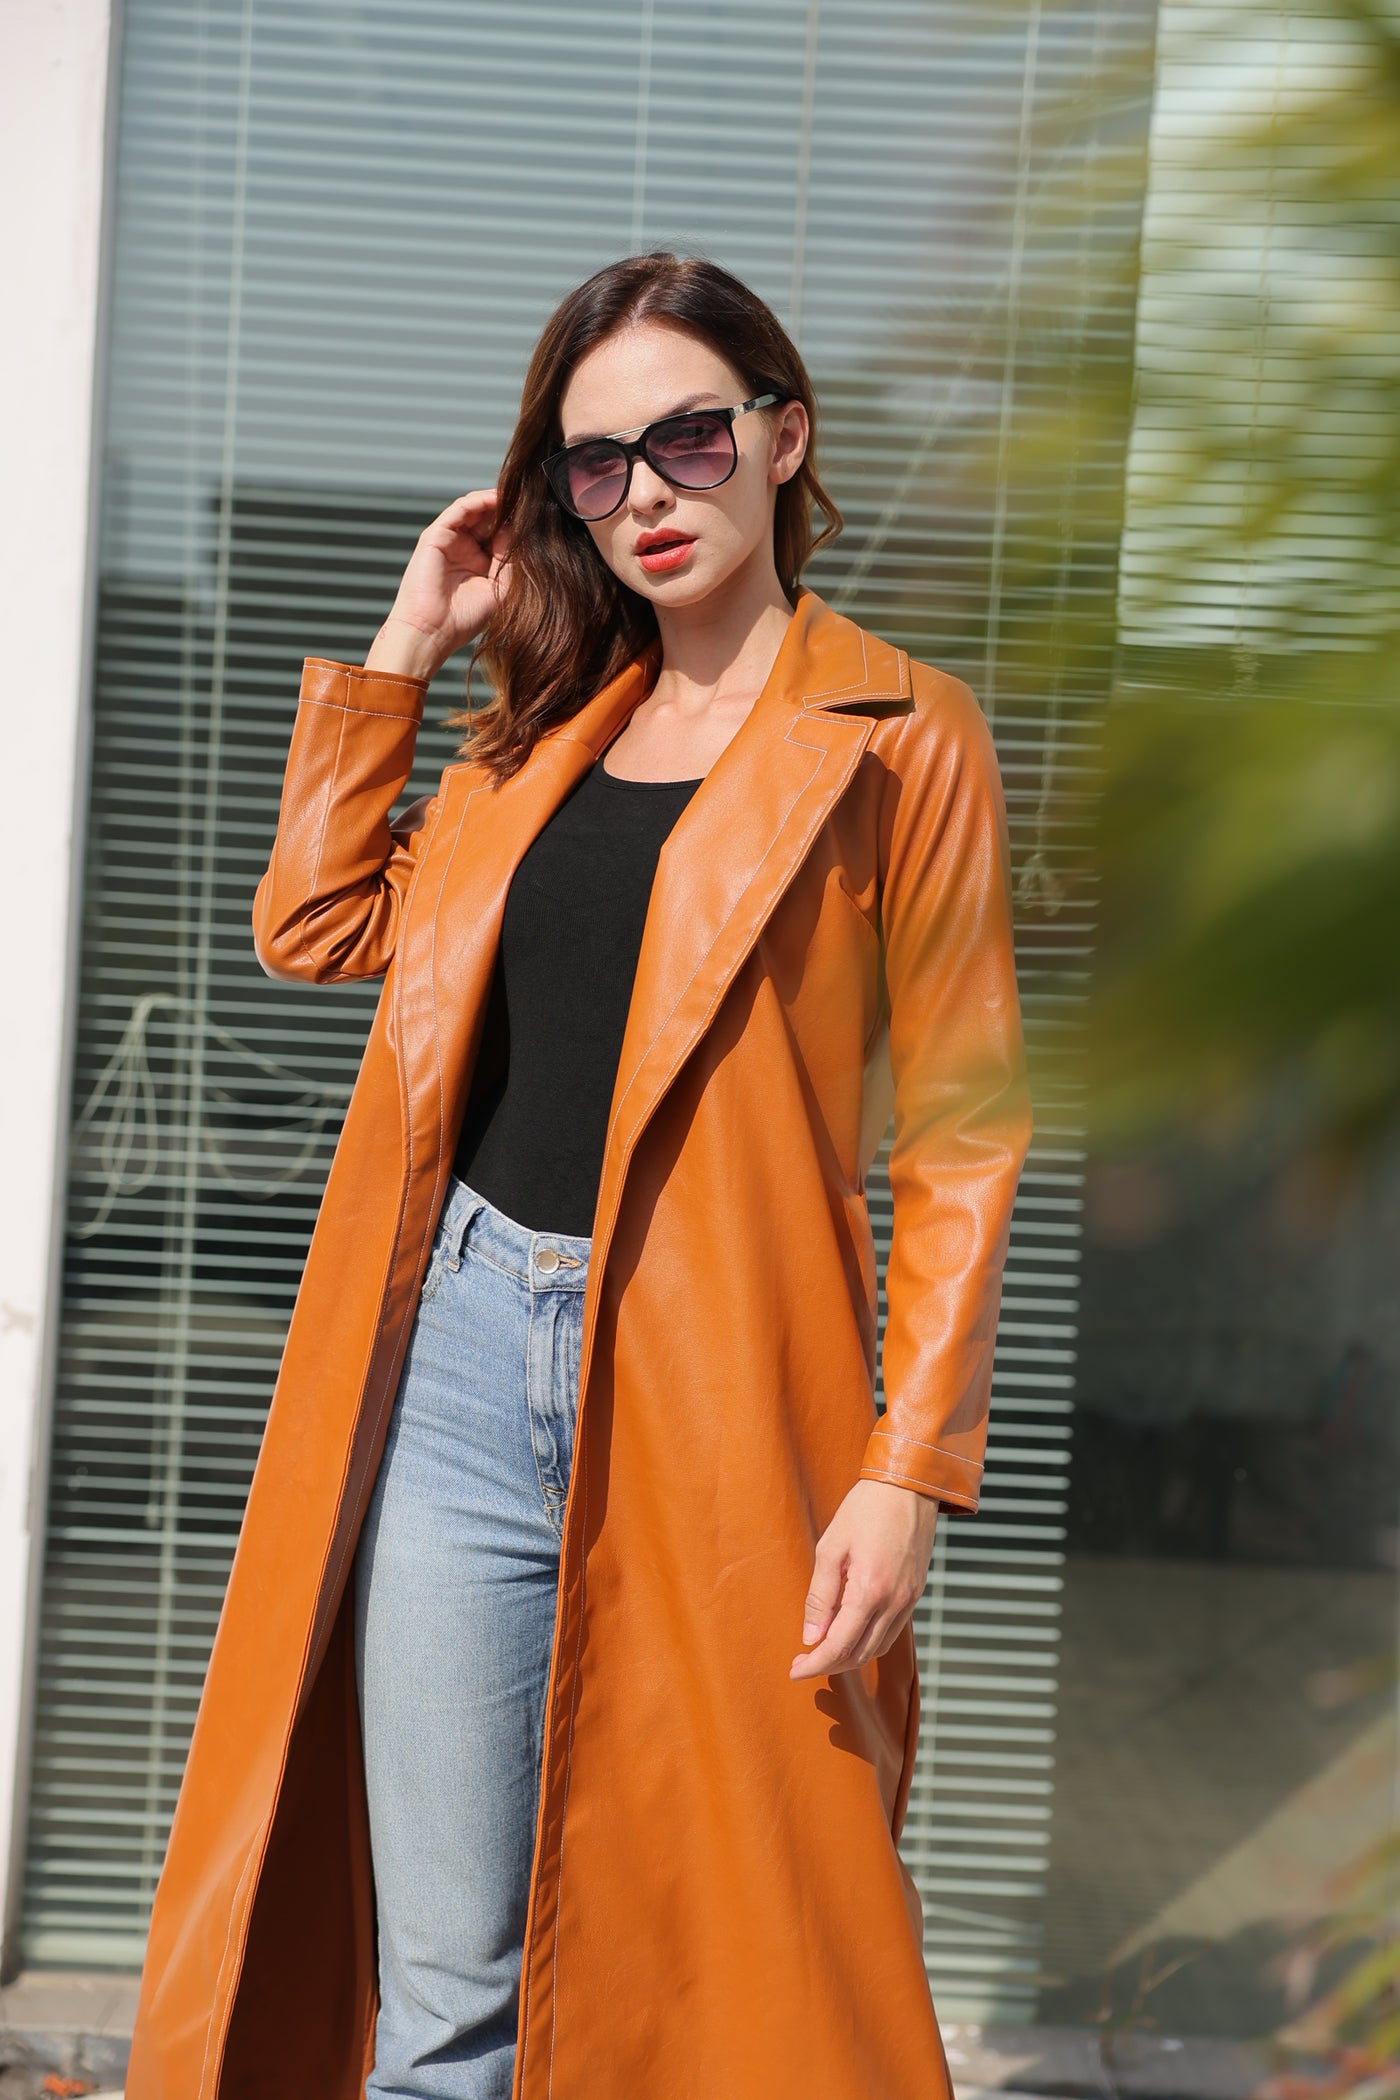 Brown Leather Abaya